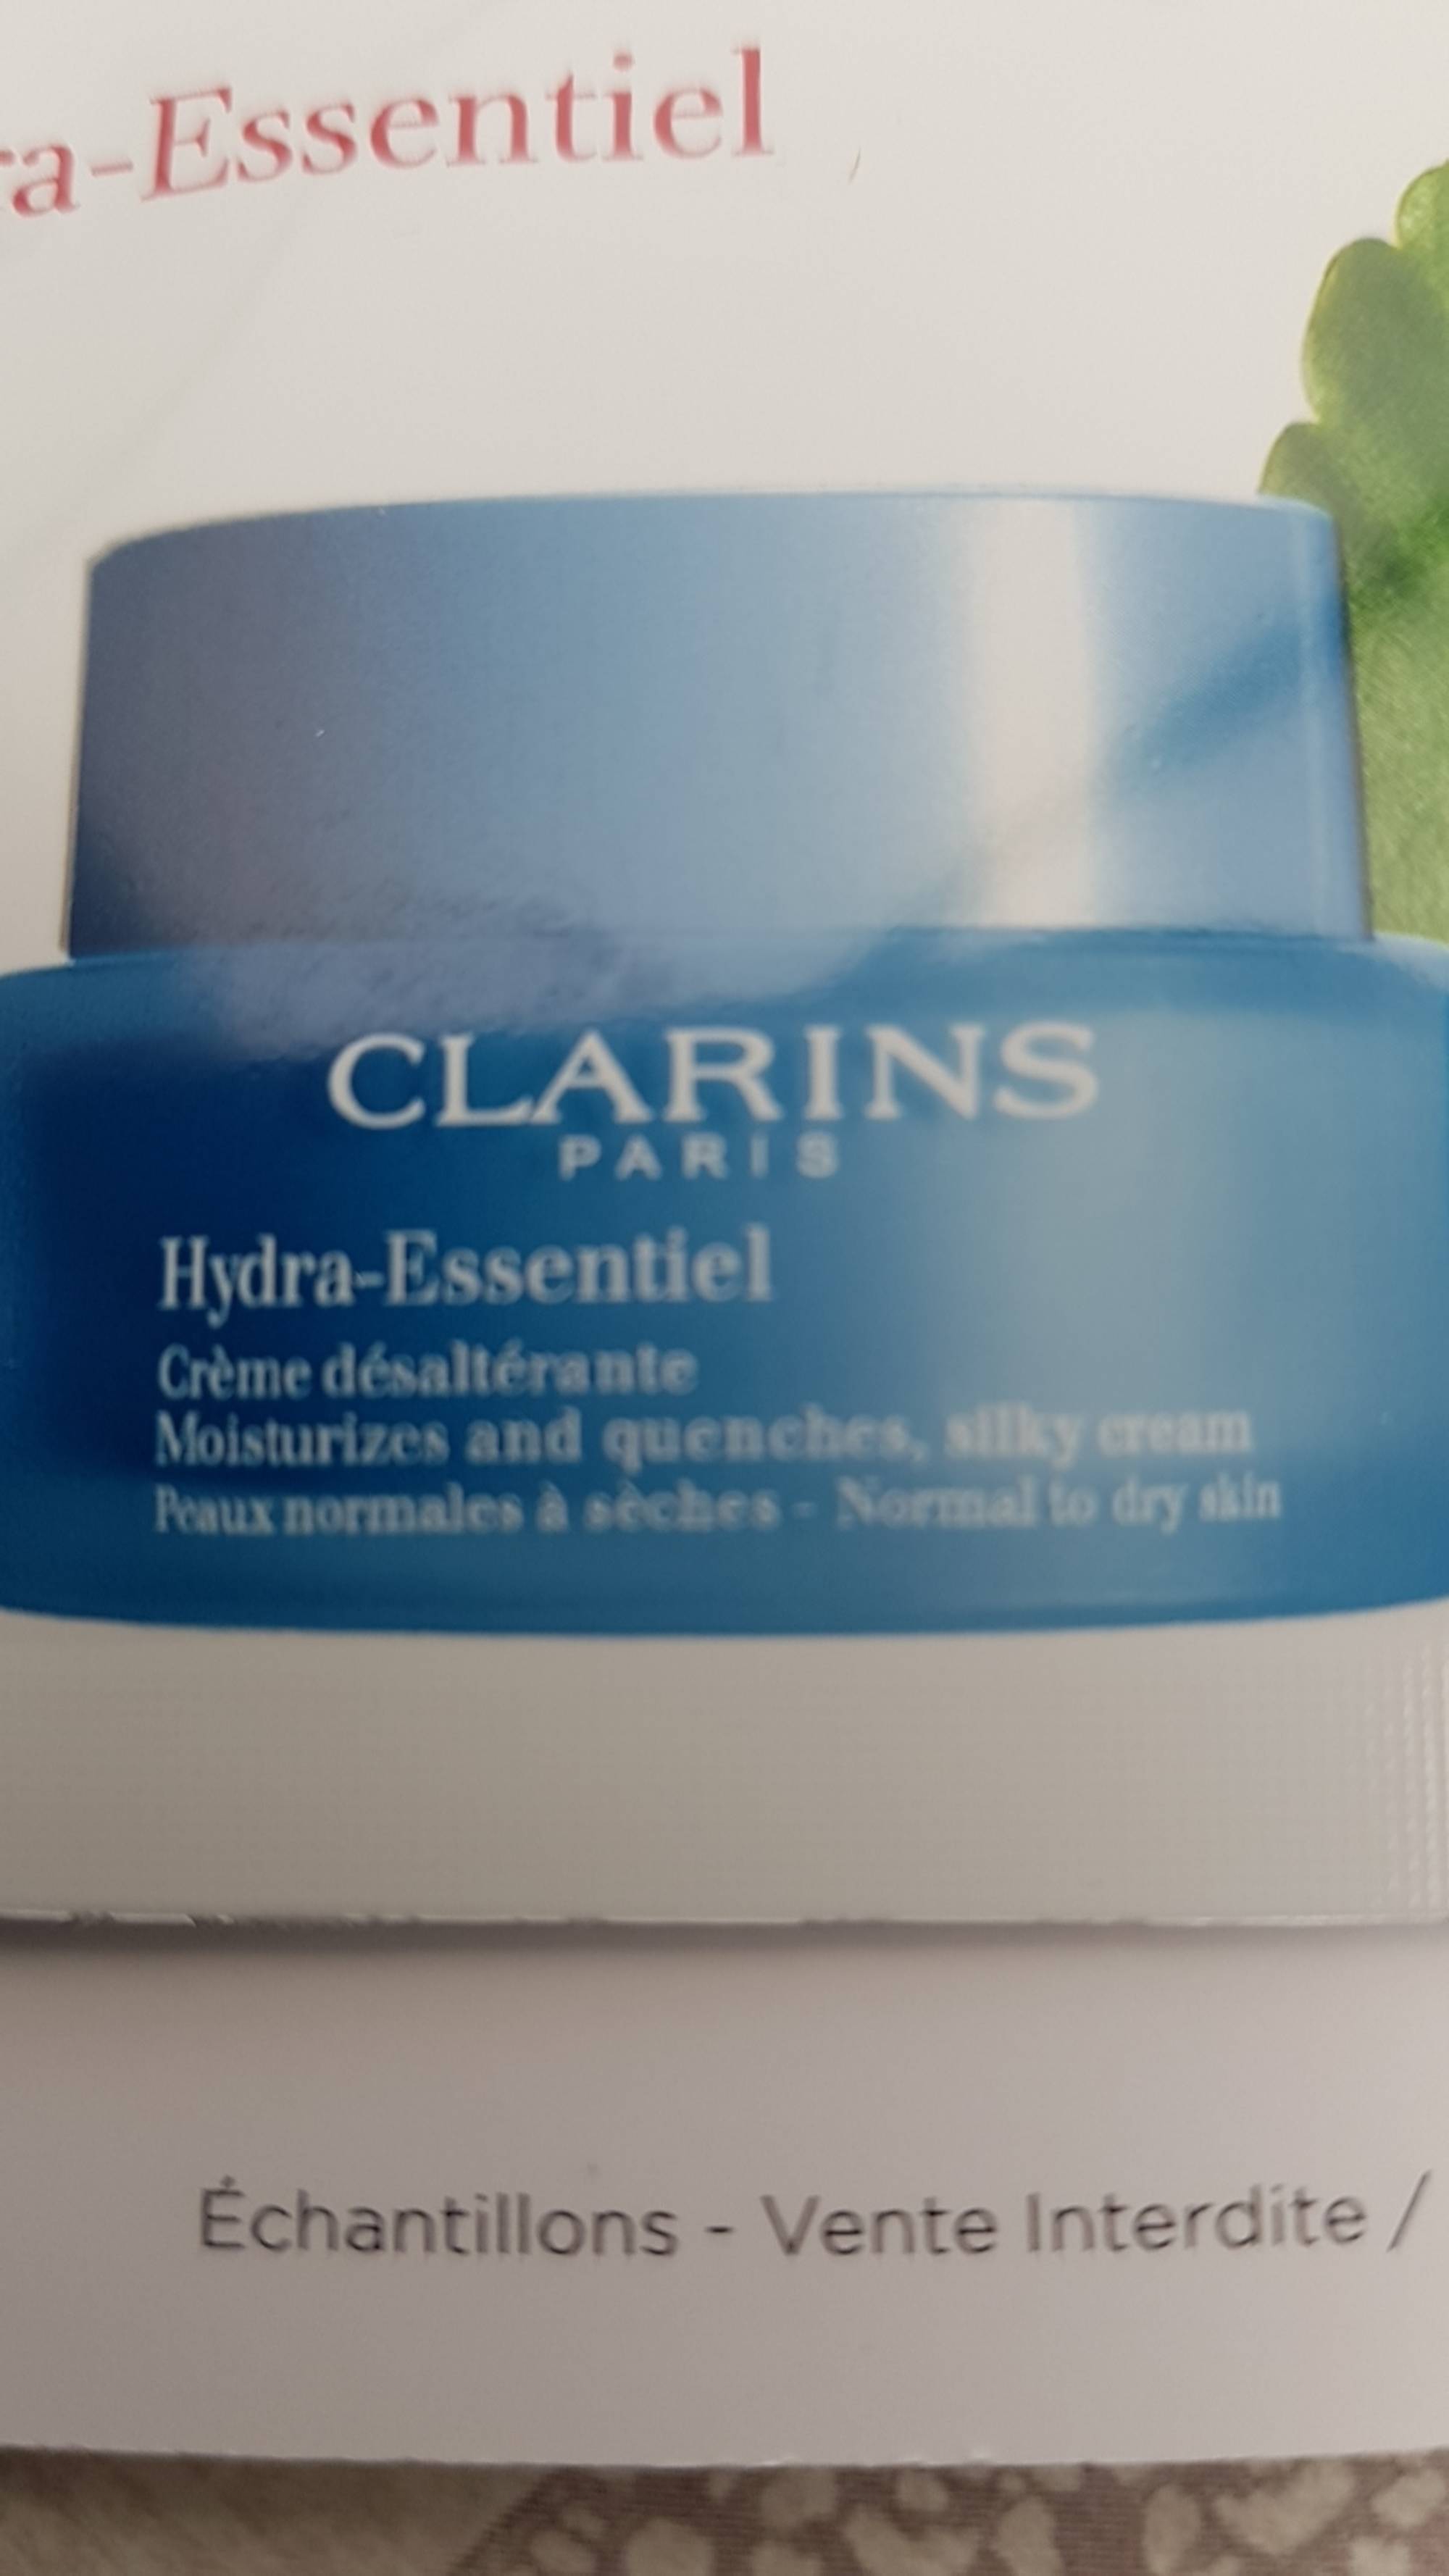 CLARINS - Hydra-Essentiel - Crème désaltérante